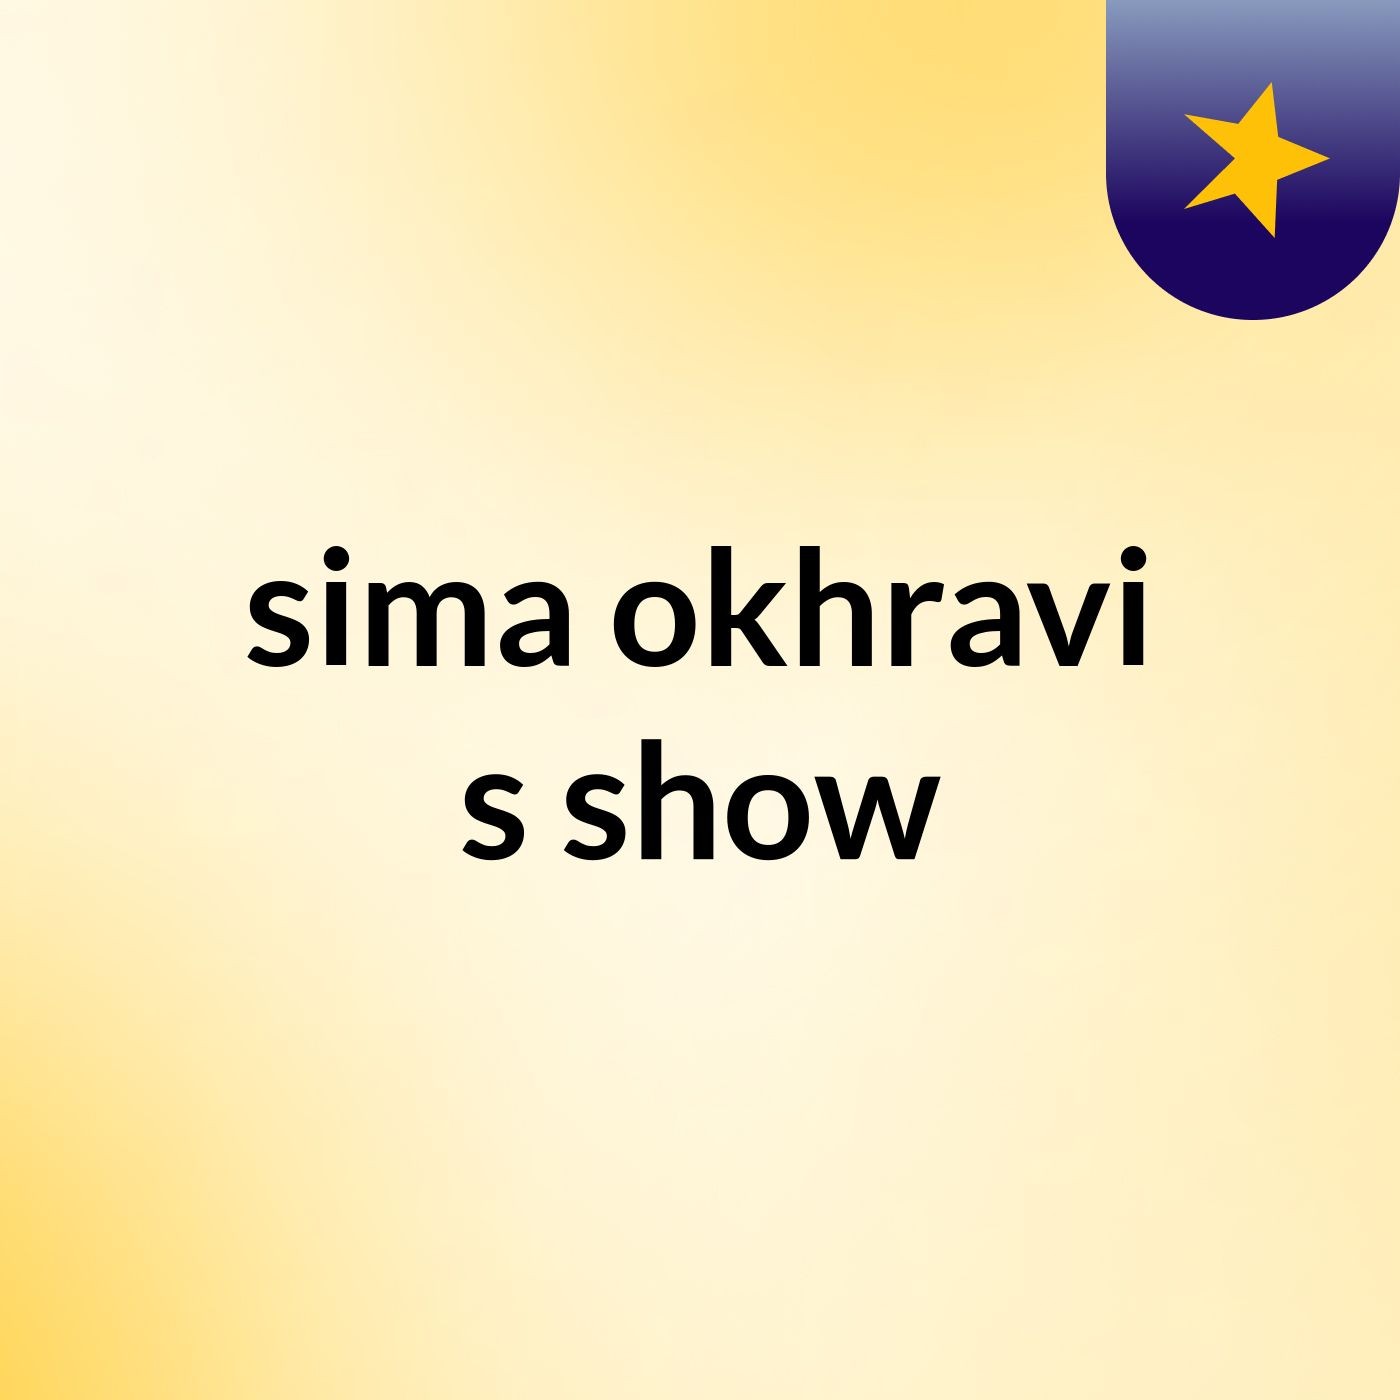 Episode 3 - sima okhravi's show